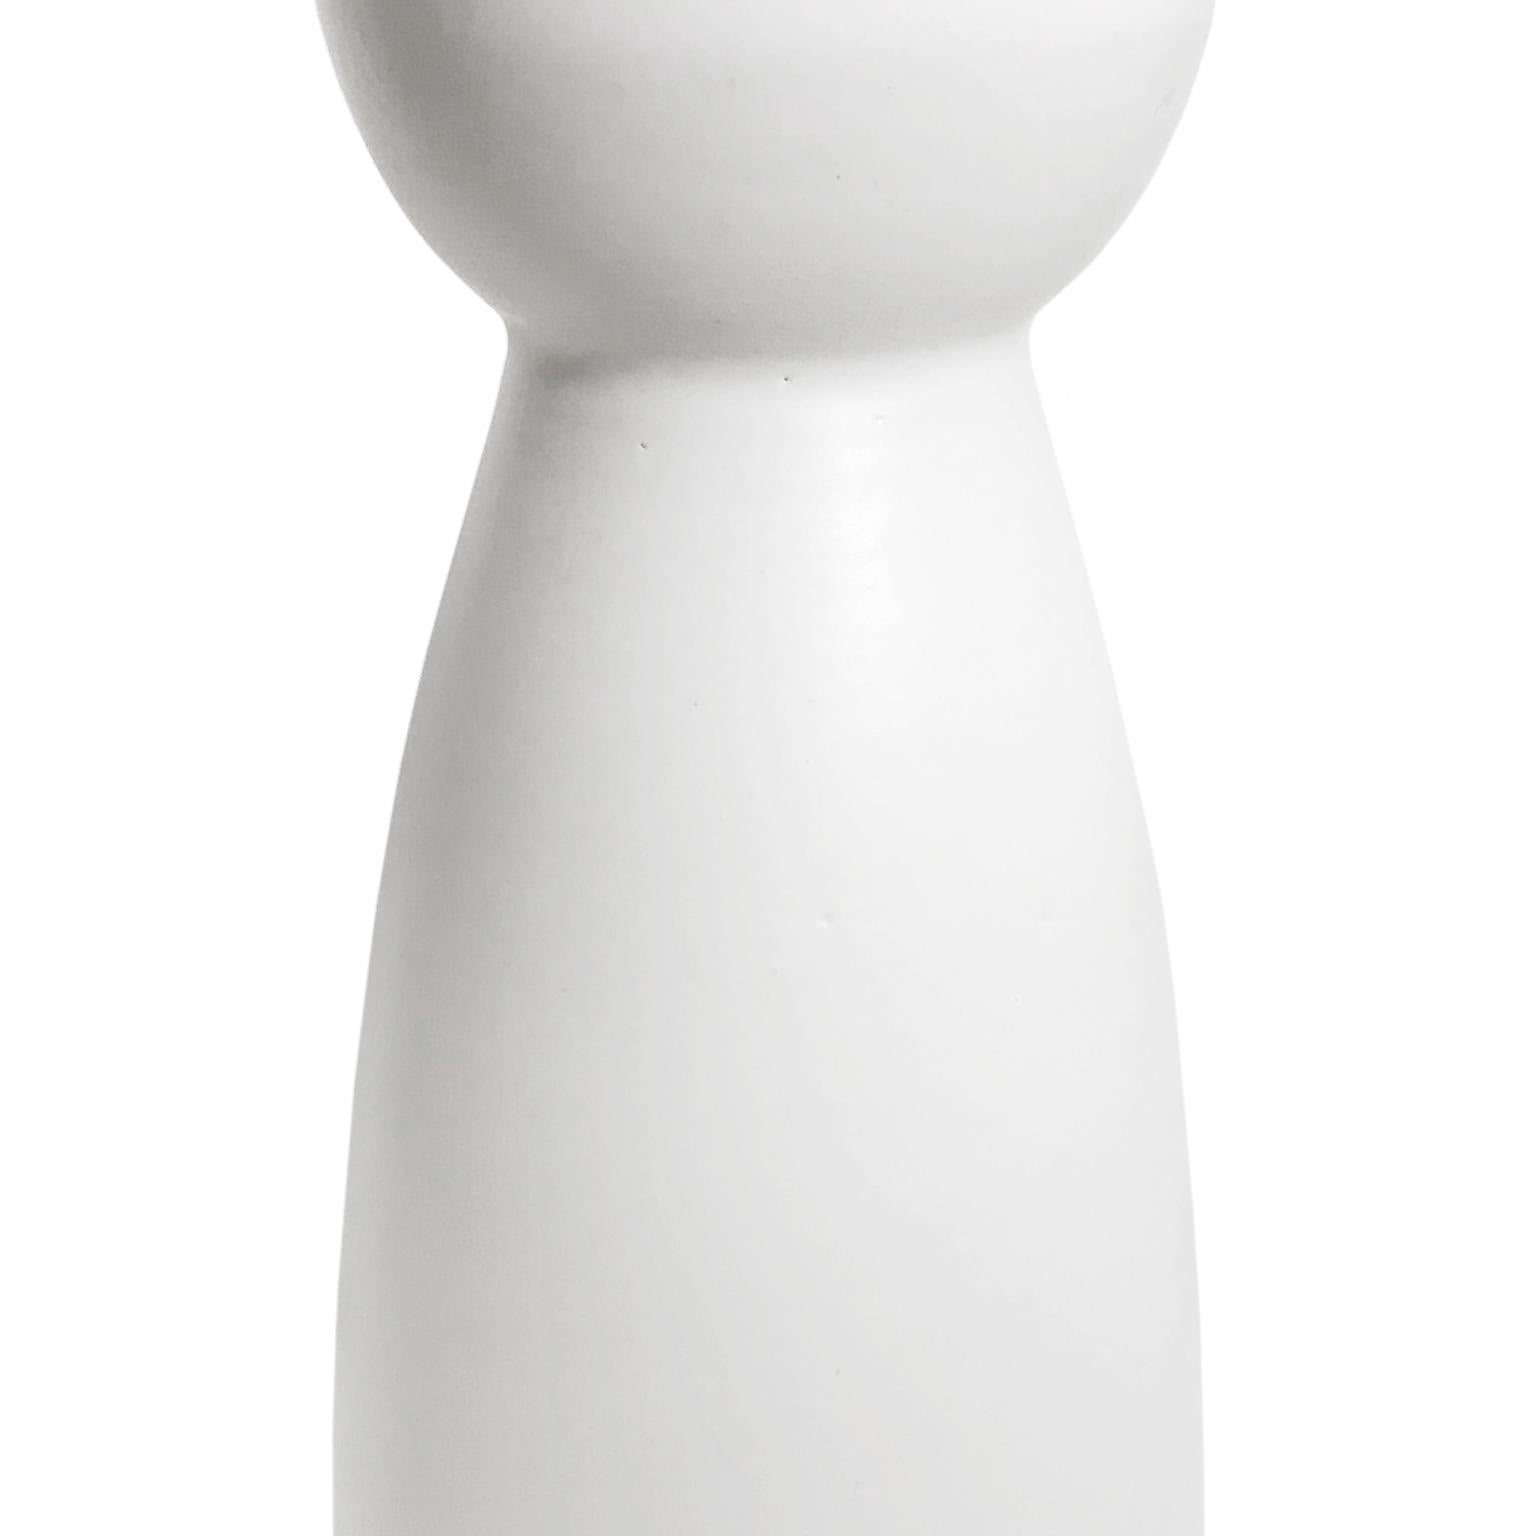 American Alabaster Glaze Ceramic Vase #3 by Sandi Fellman